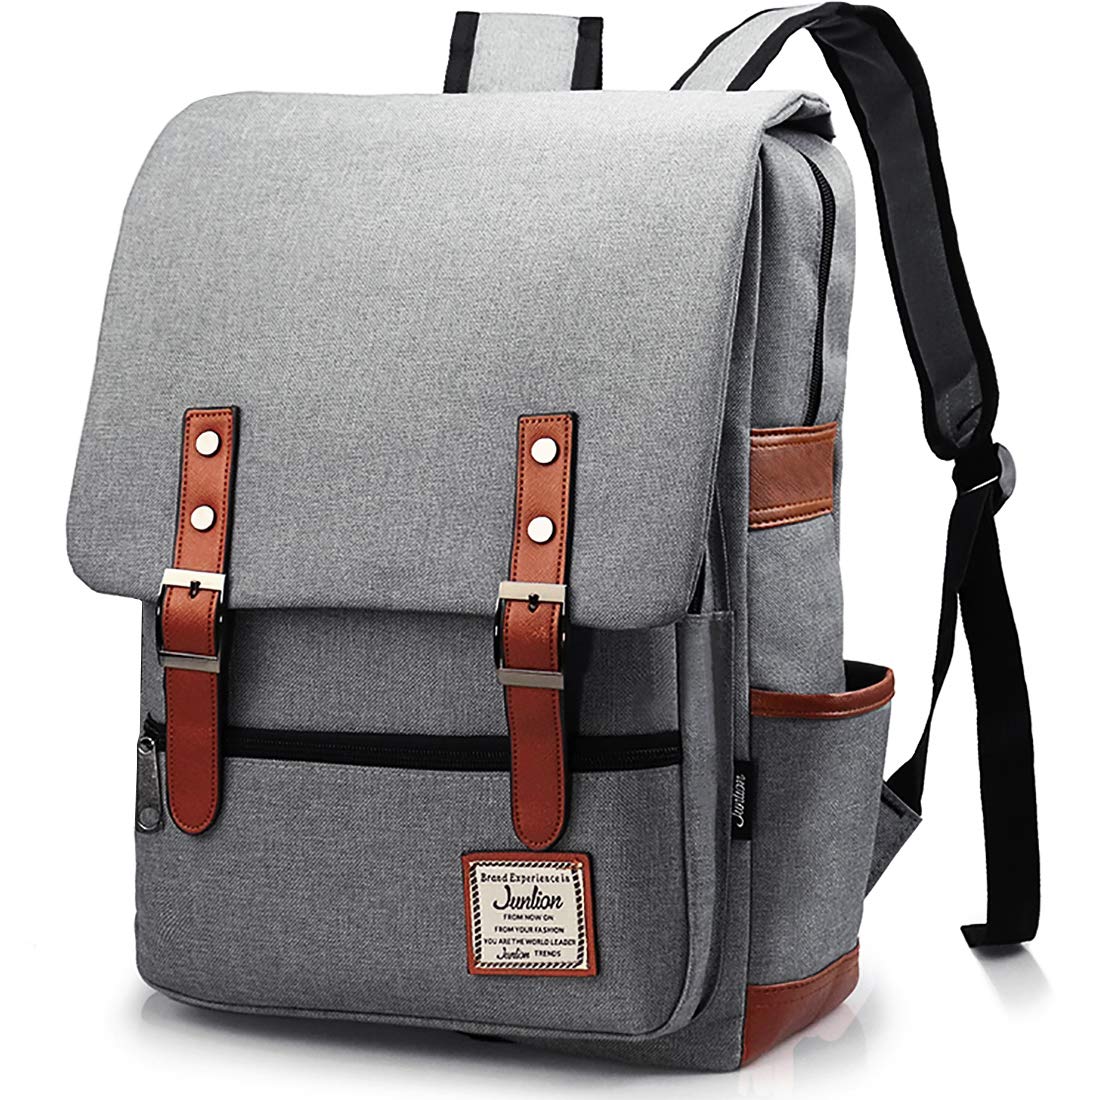 Junlion Vintage Laptop Backpack Gift for Women Men, School College Slim Backpack Fits 15.6 inch MacBook Gray